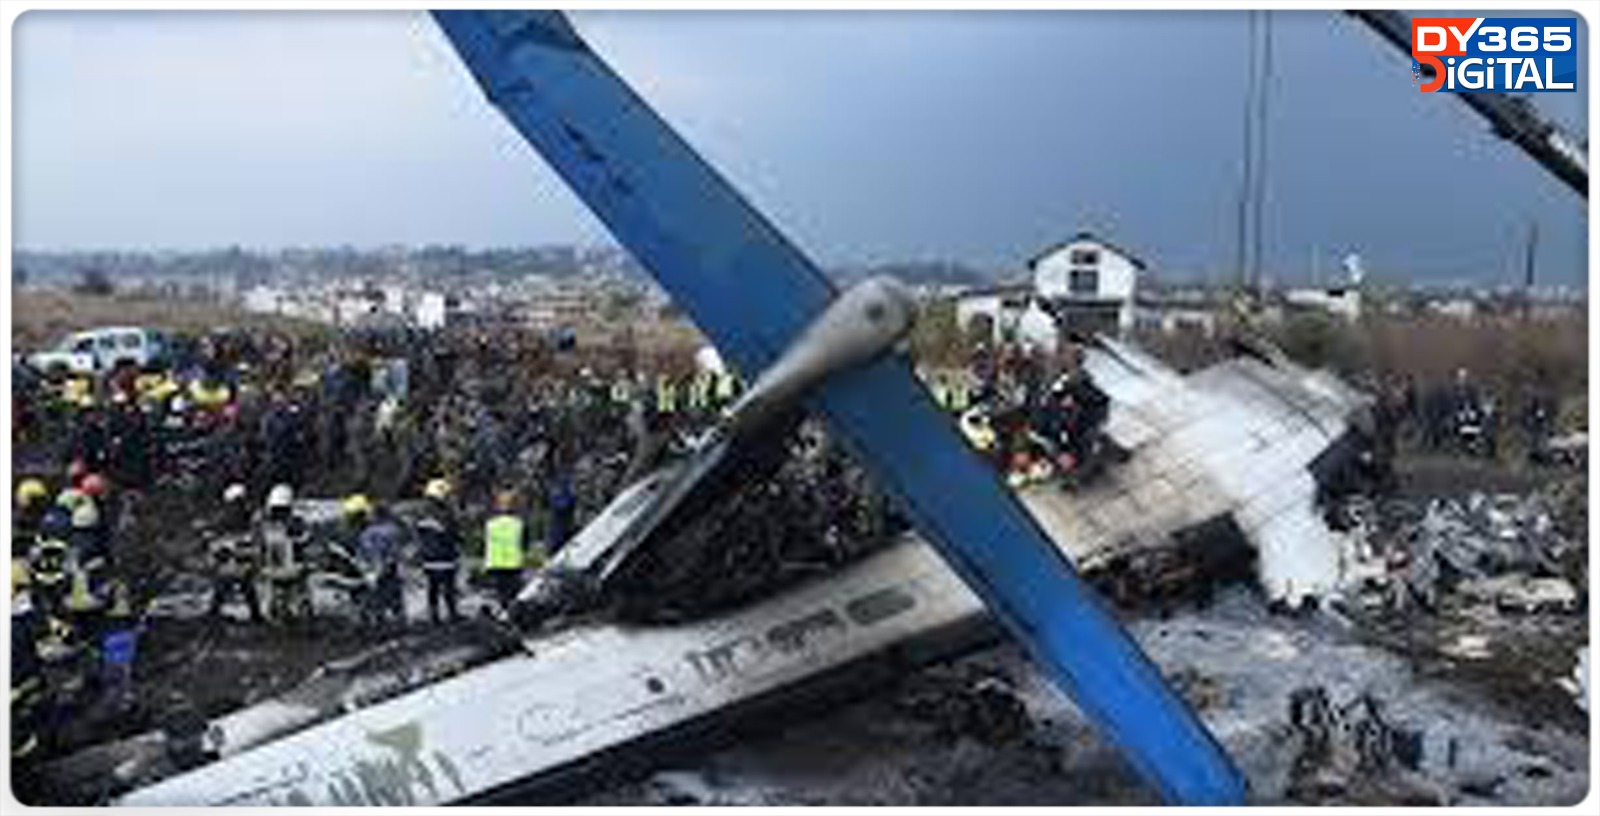 Nepal Plane Crash Saurya Airlines Aircraft Crashes During Takeoff at Kathmandu Airport